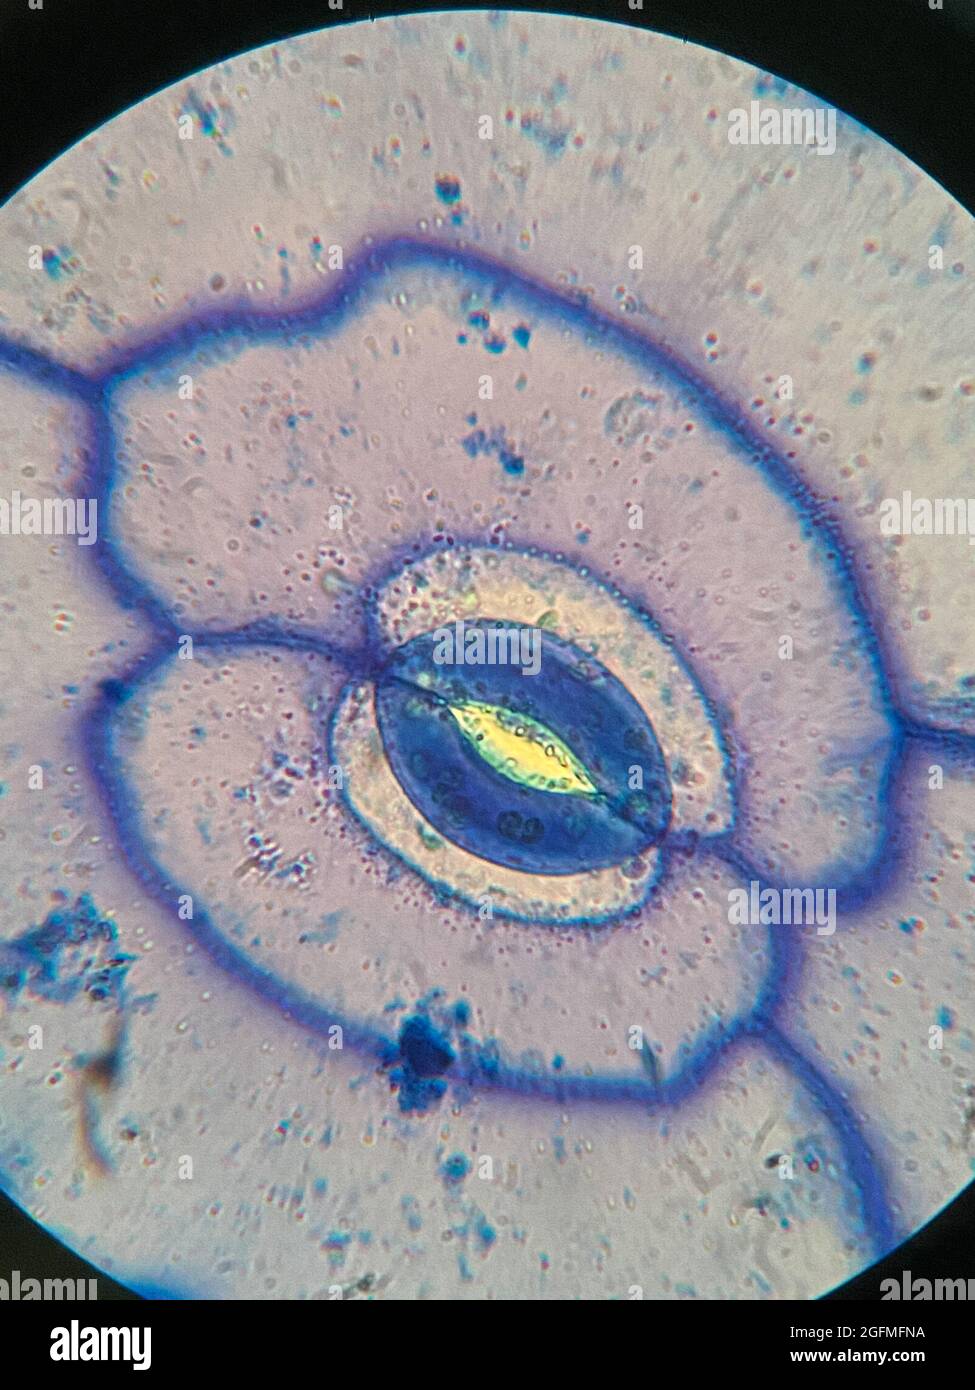 microscopic photo of stomata on the leaf of Portulaca oleracea plant Stock Photo